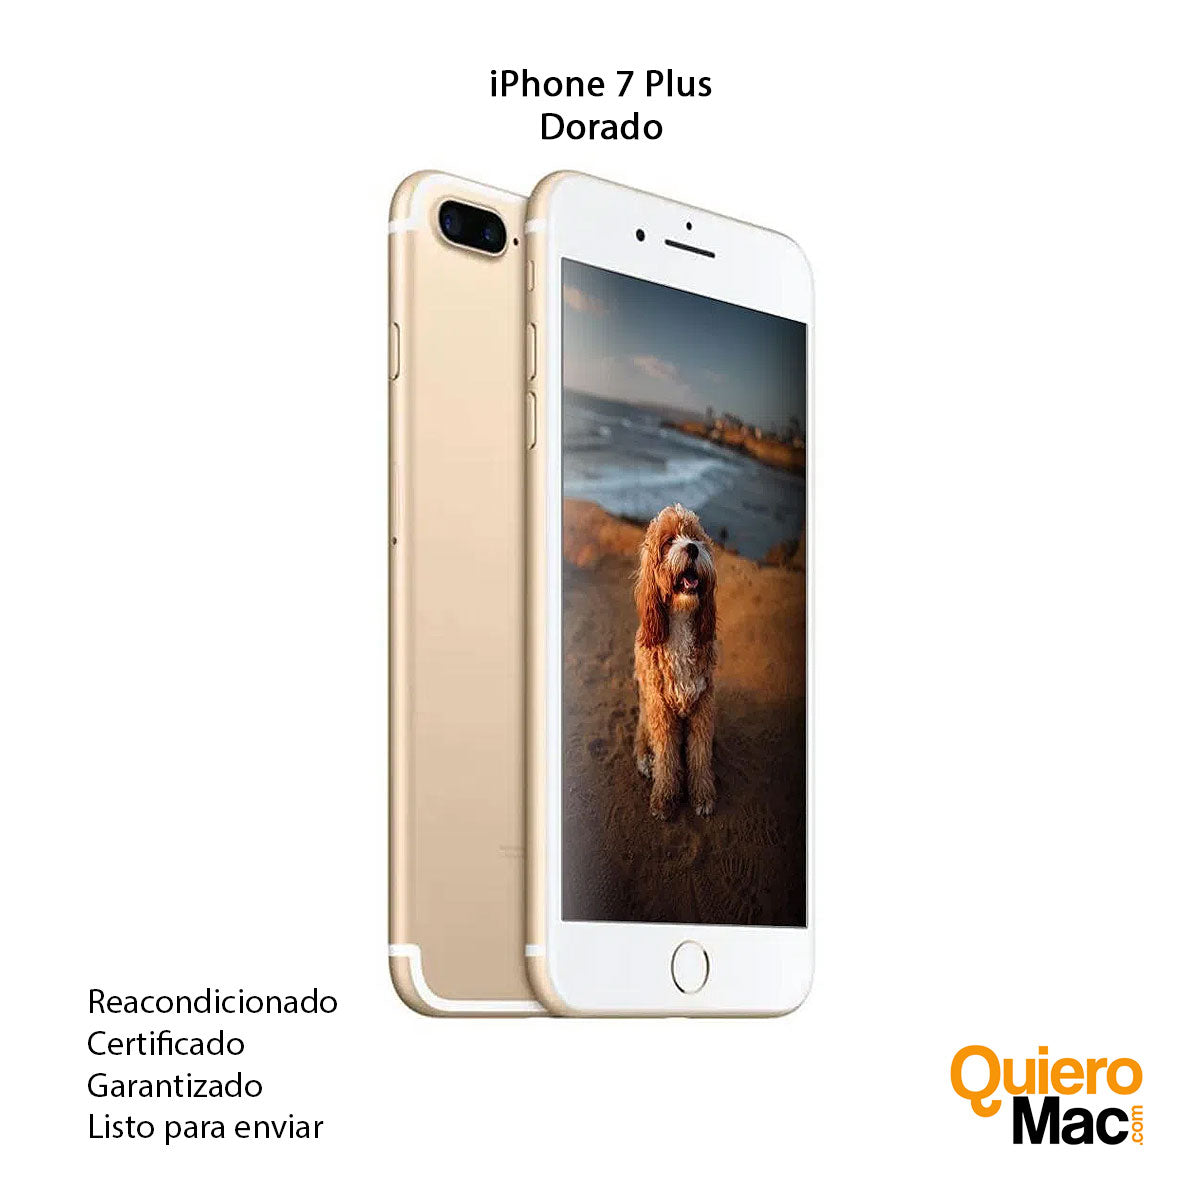 Celular iPhone 13 Pro Max 128GB - Dorado Reacondicionado Grado A, Apple